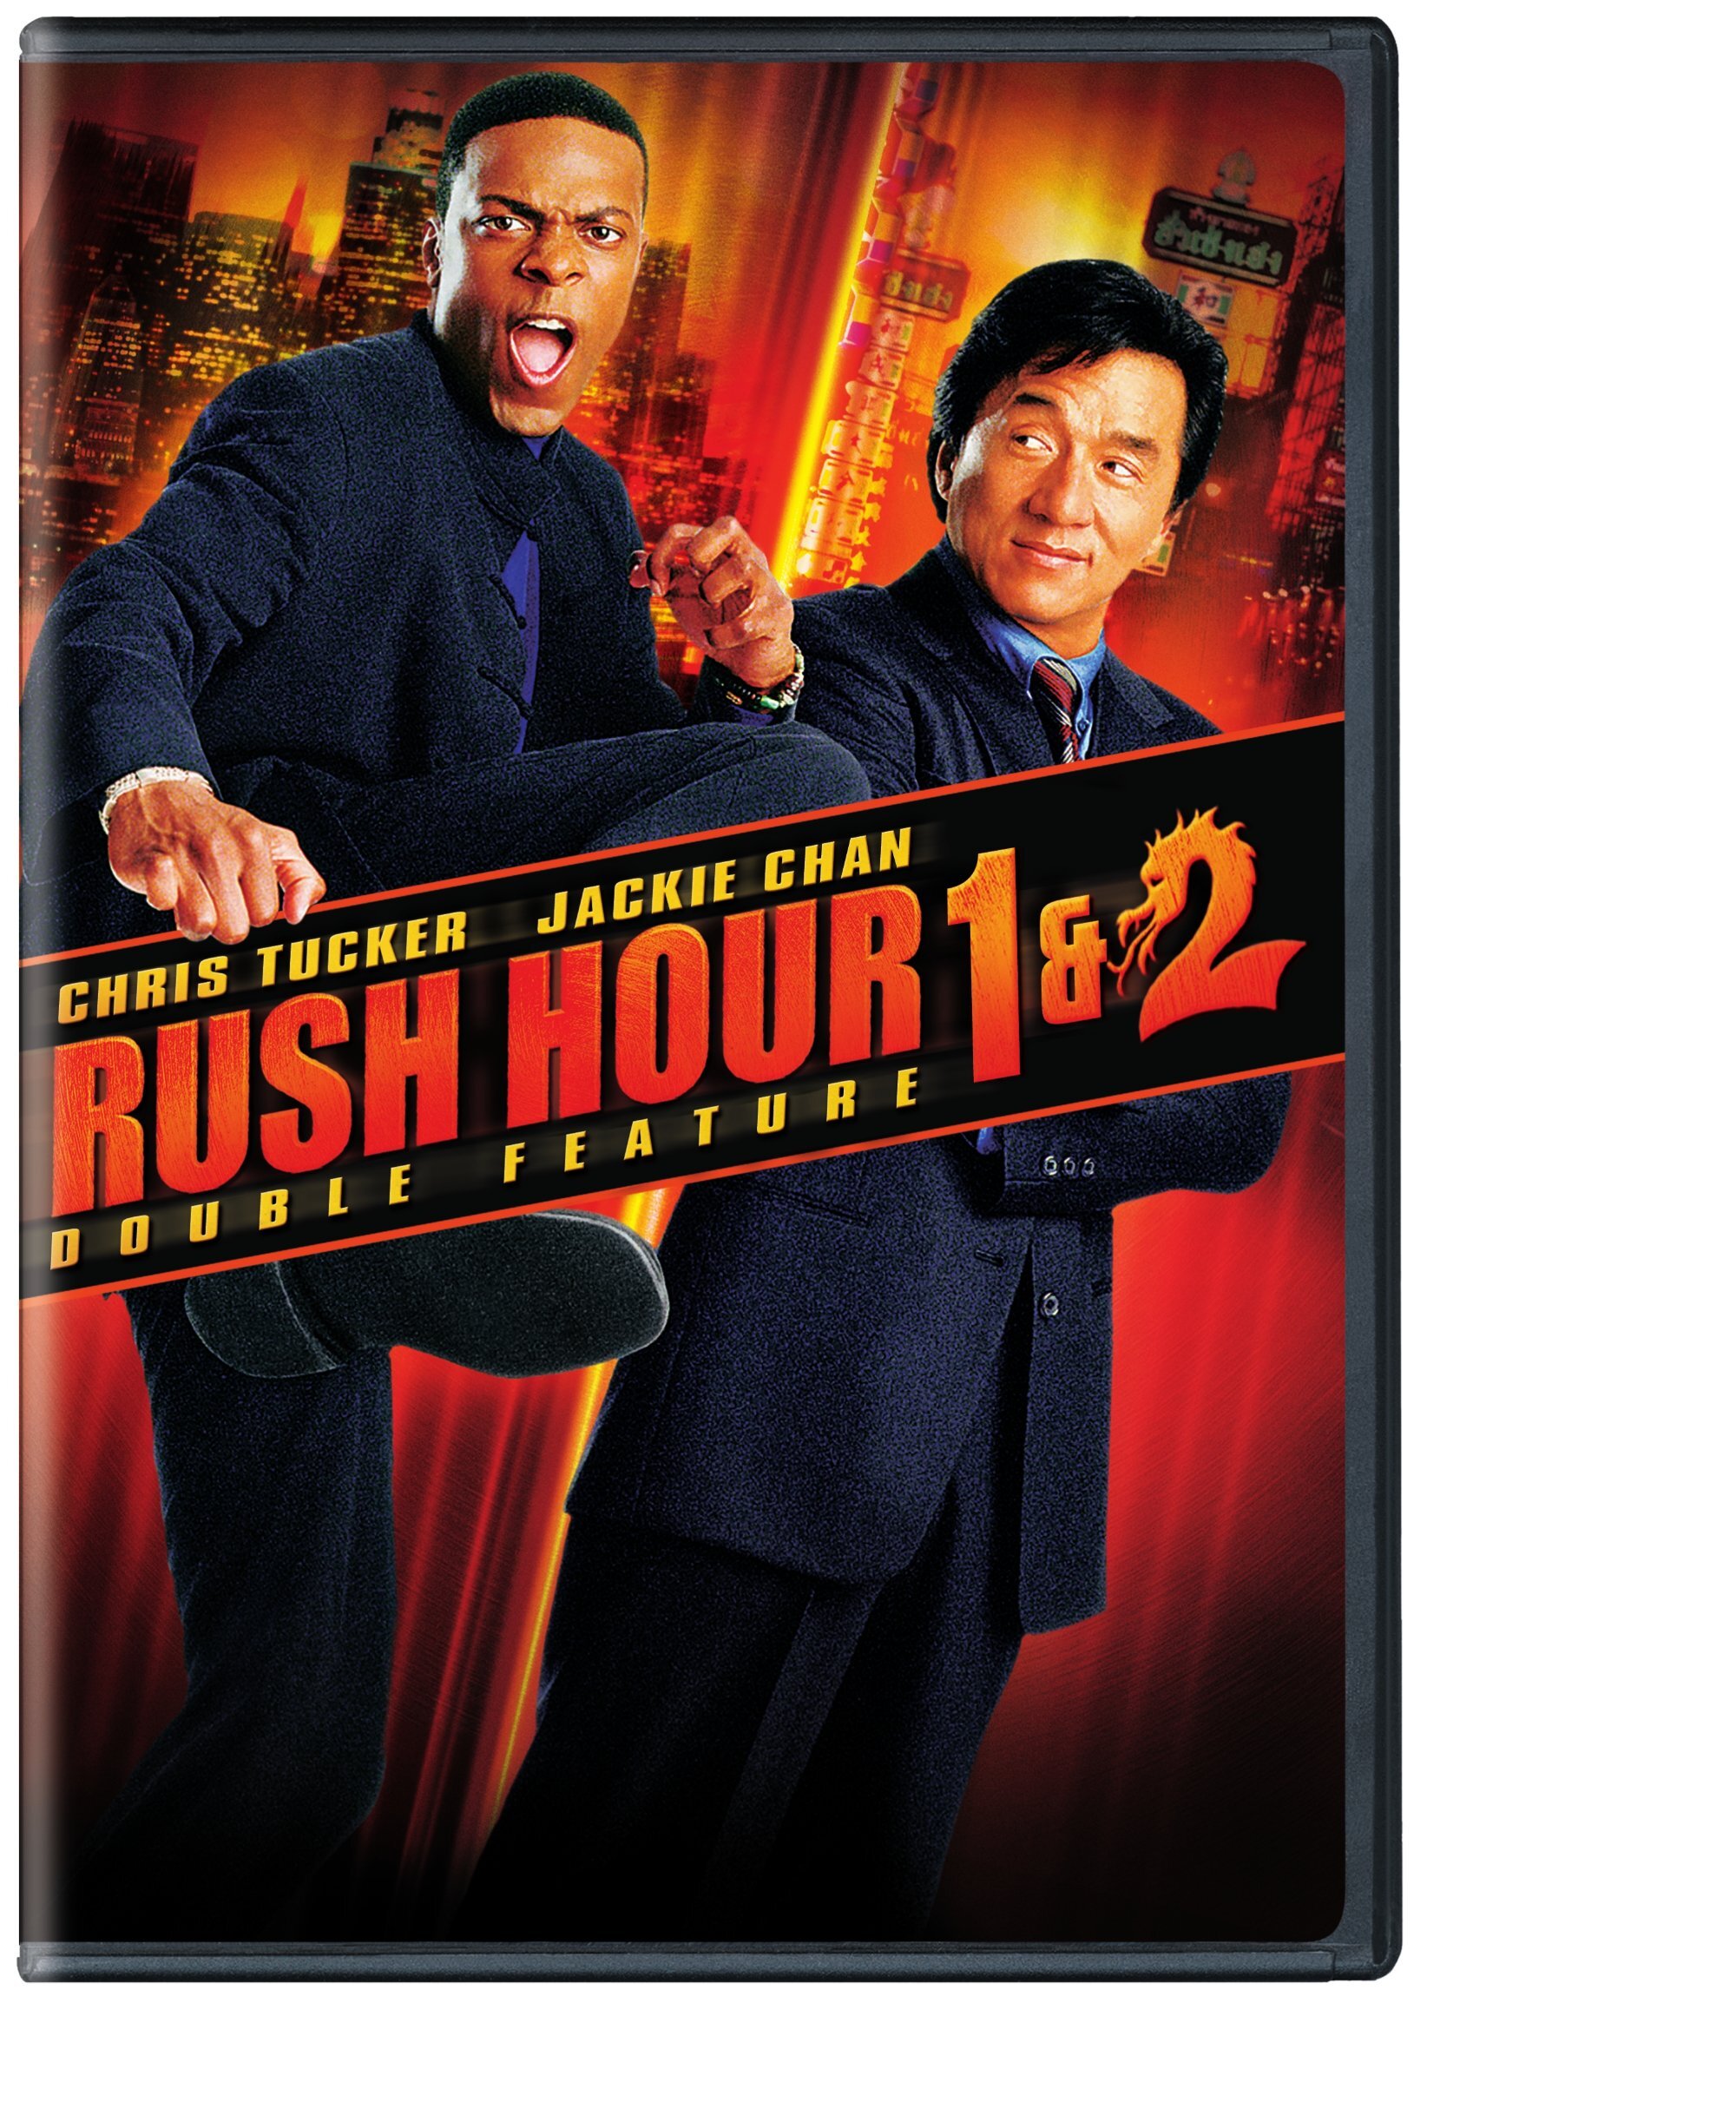 Rush Hour/Rush Hour 2 (DVD New Box Art) - DVD [ 2001 ]  - Comedy Movies On DVD - Movies On GRUV